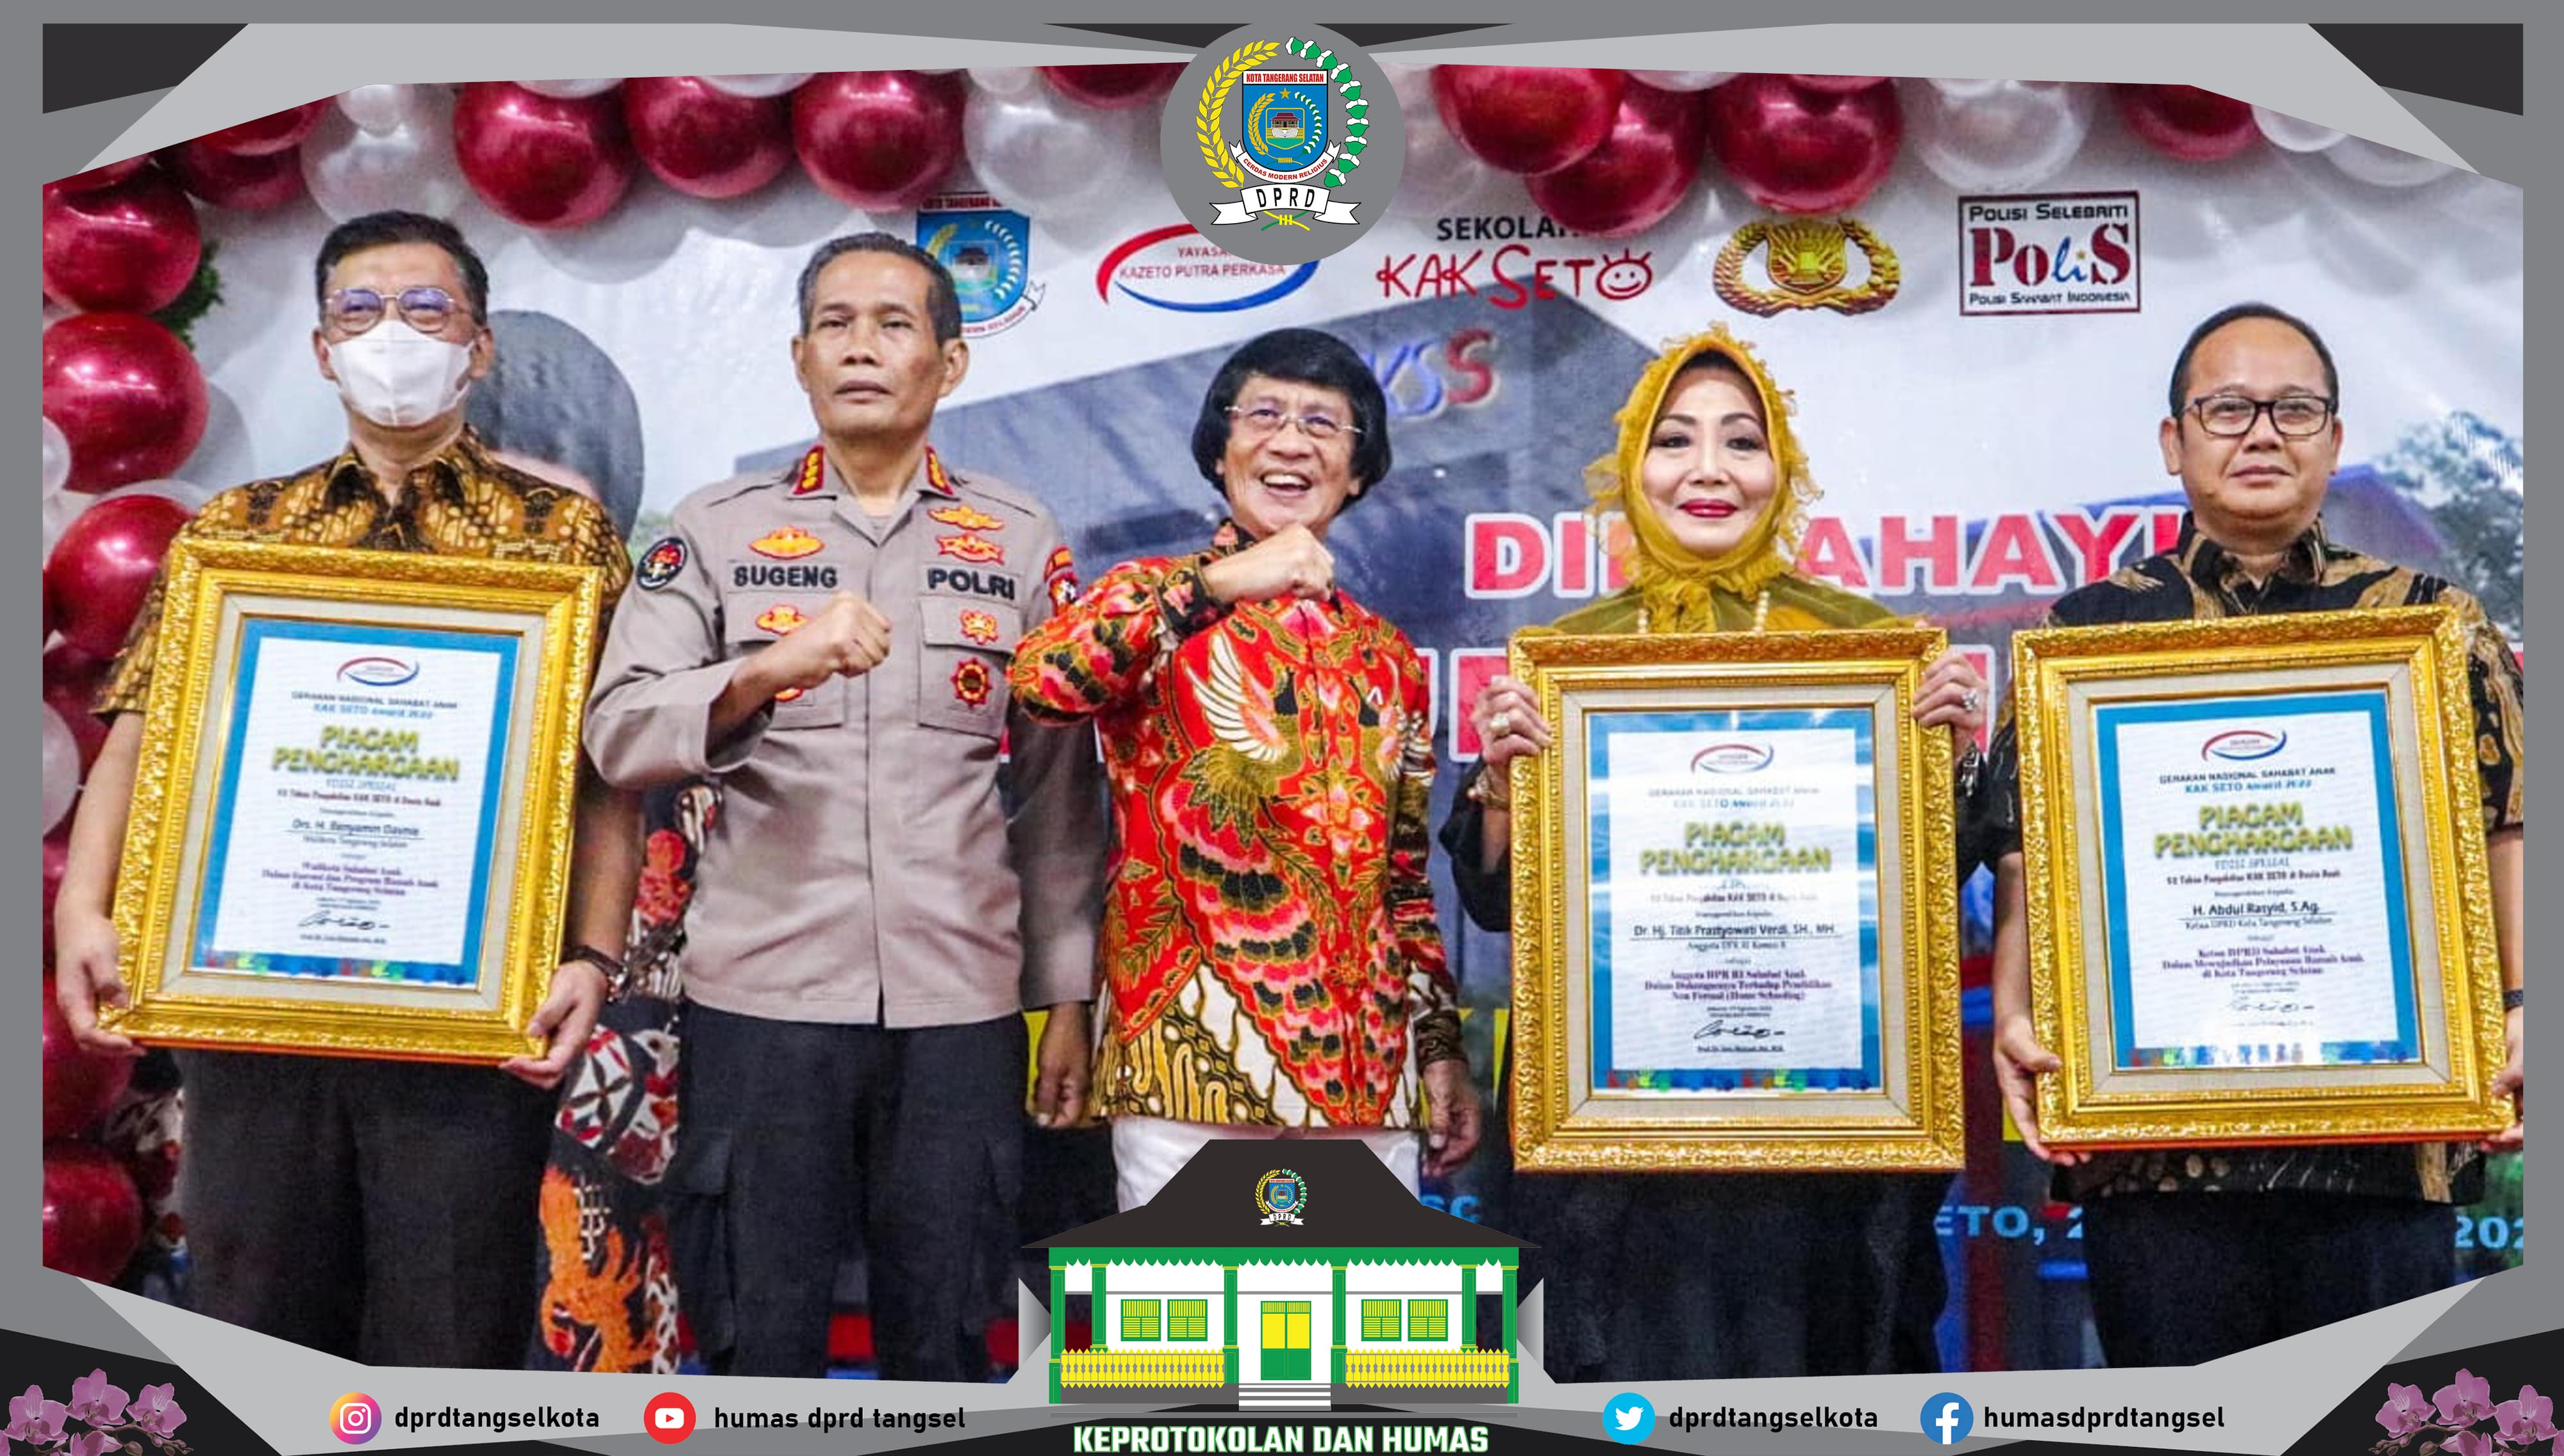 DPRD Kota Tangerang Selatan menerima Penghargaan Kak Seto Award